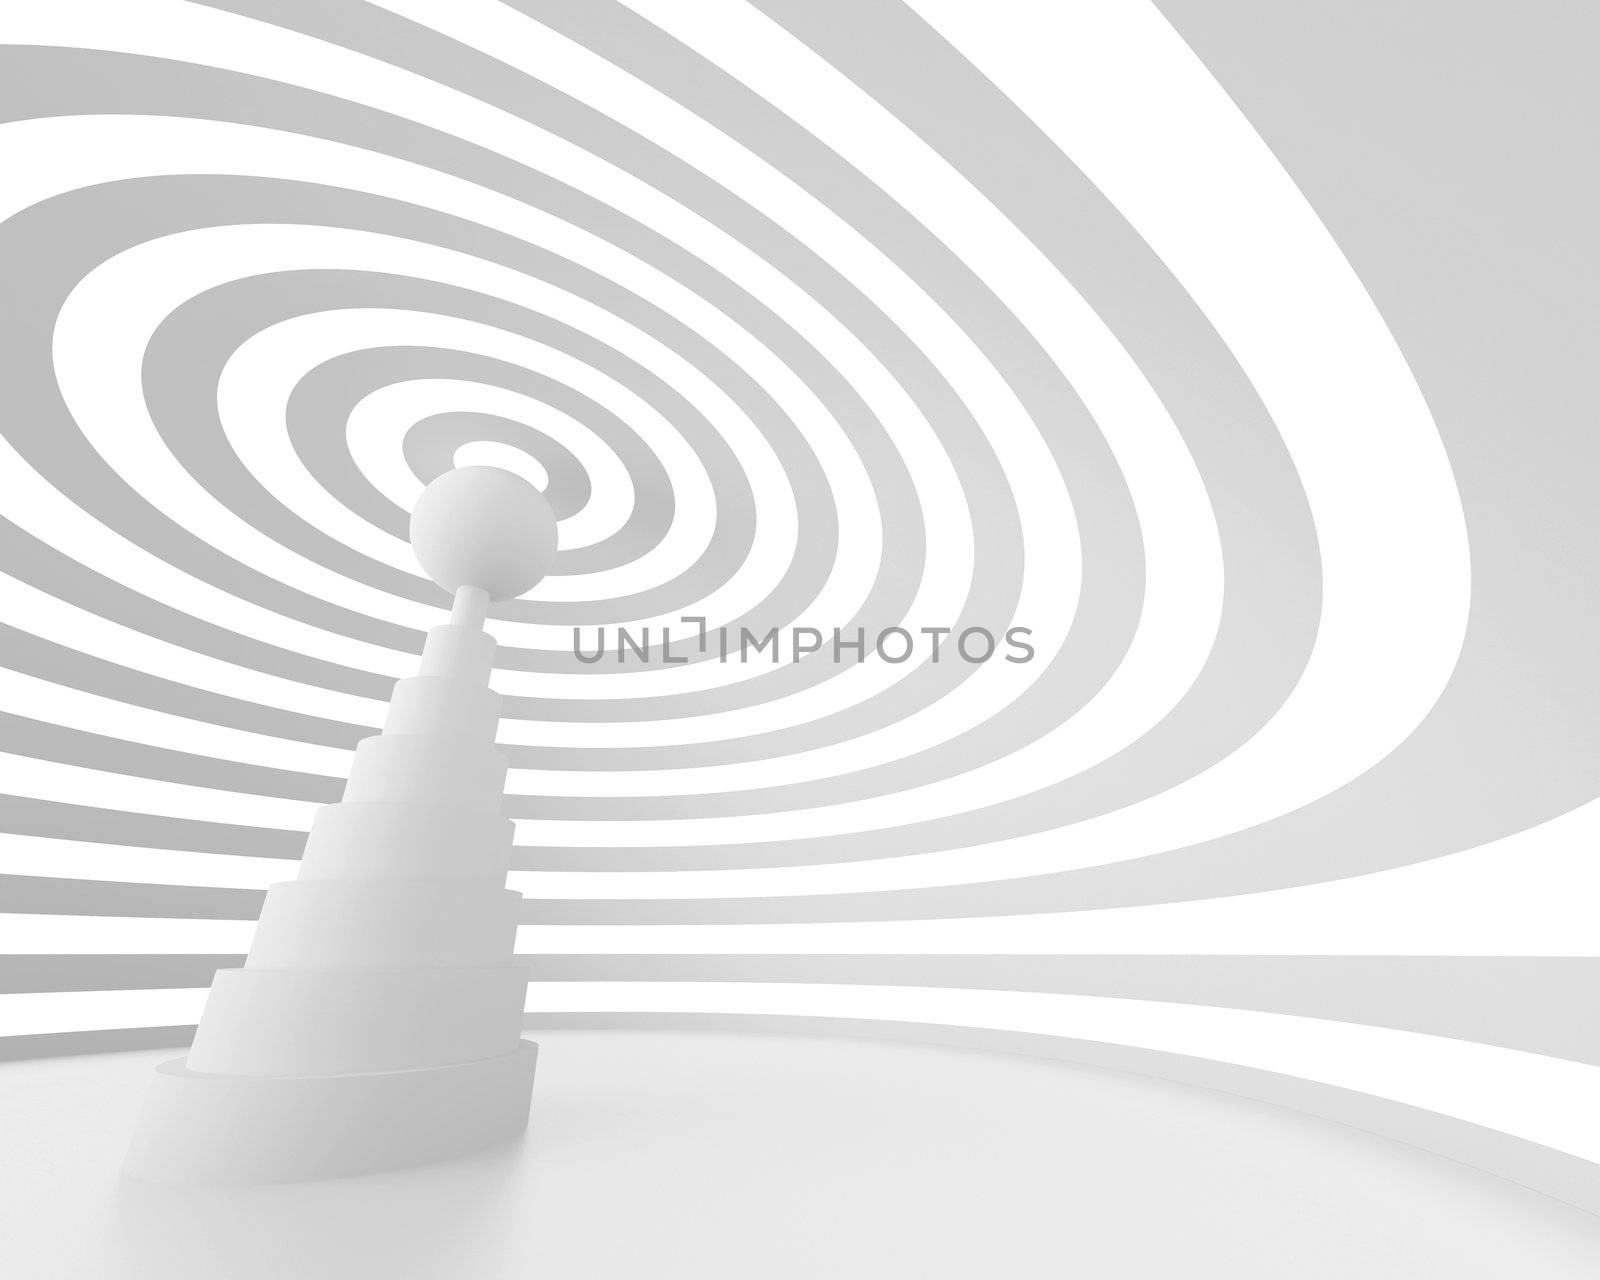 3d Illustration of White Wireless Background or Wallpaper